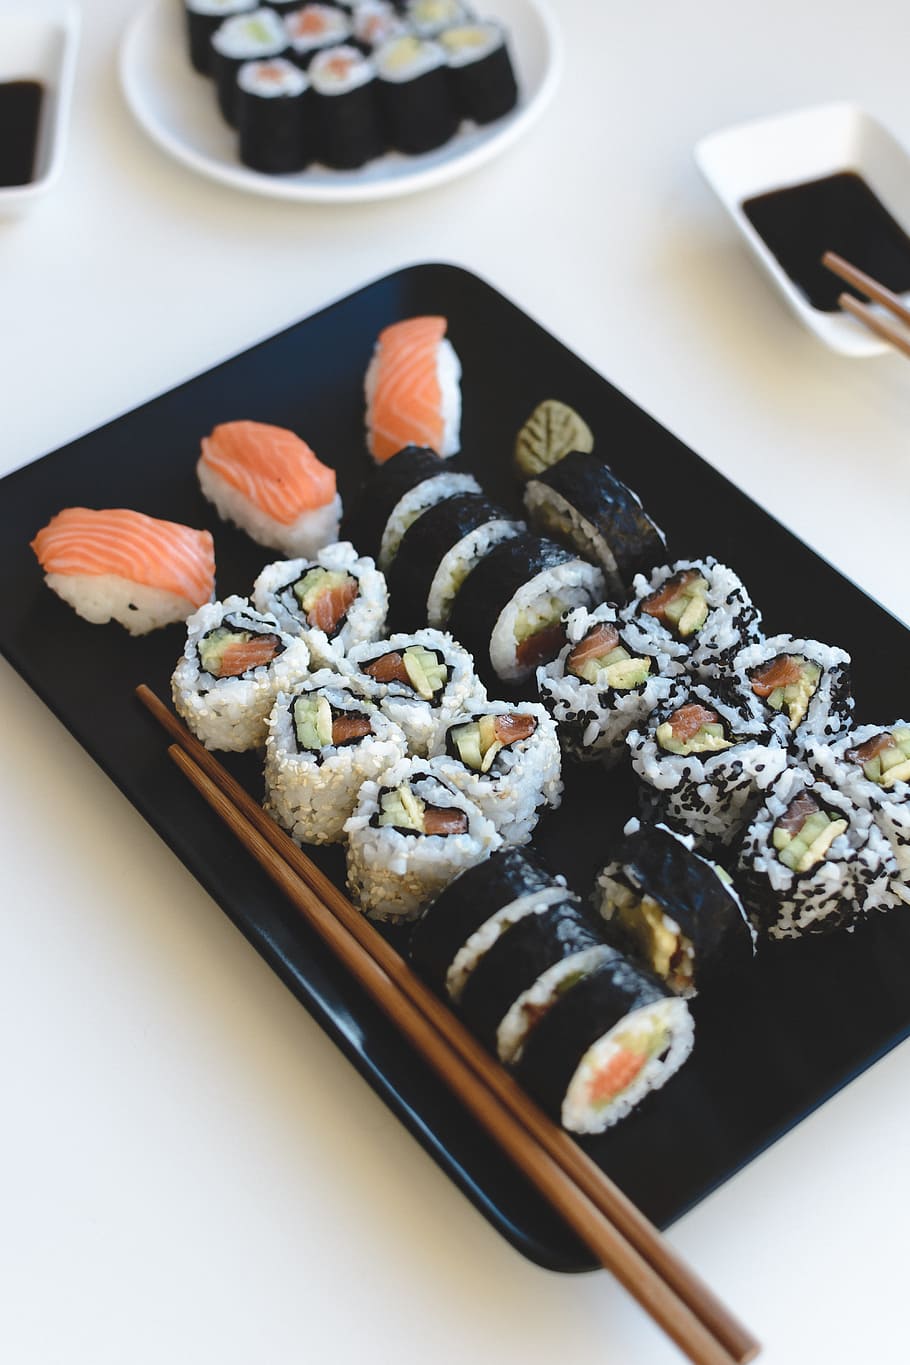 HD wallpaper: Homemade Sushi Platter, food, seafood, japan, maki Sushi, chopsticks